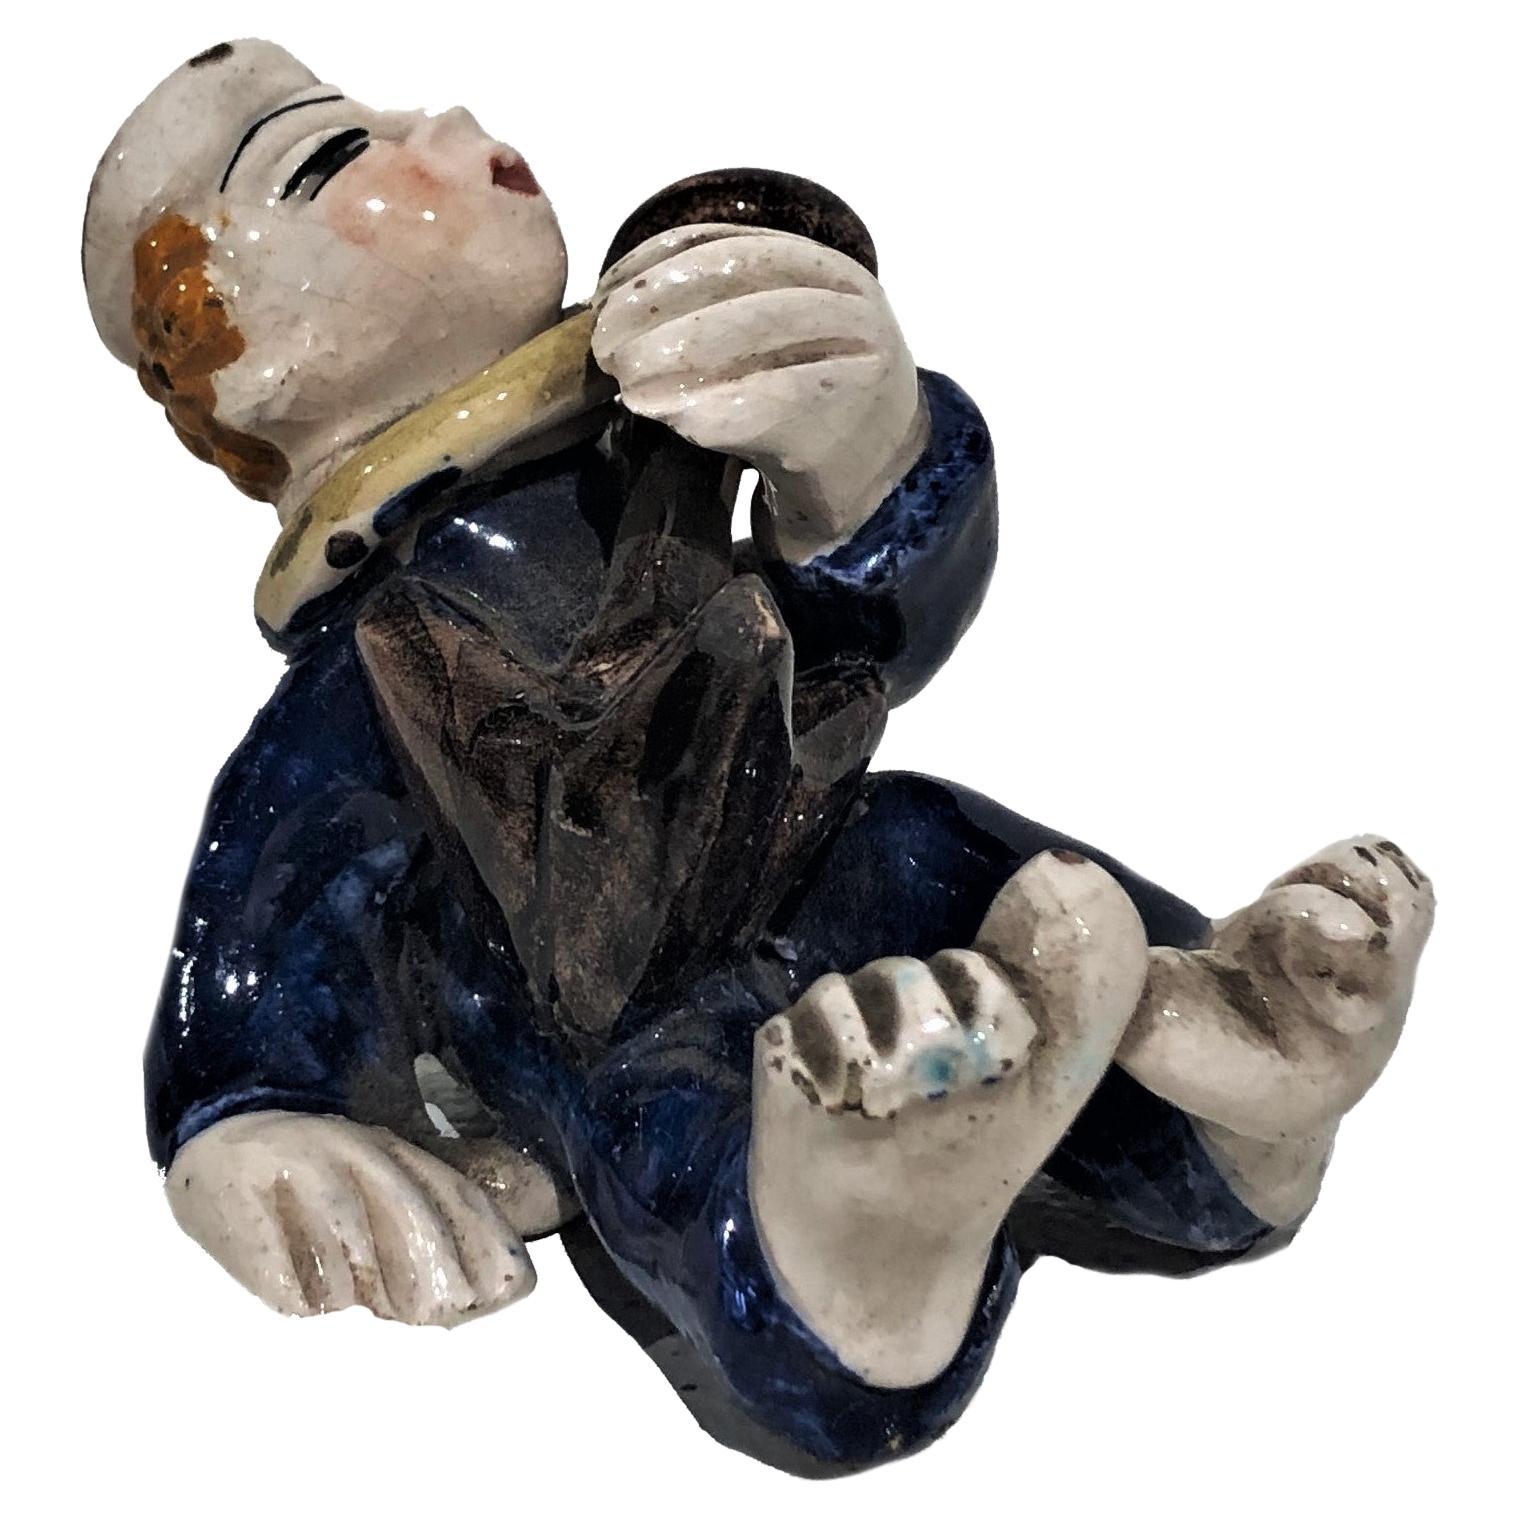 Vally Wiethelthier, Drunken Sailor, Art Deco Art Ceramic Figurine, ca. 1925 For Sale